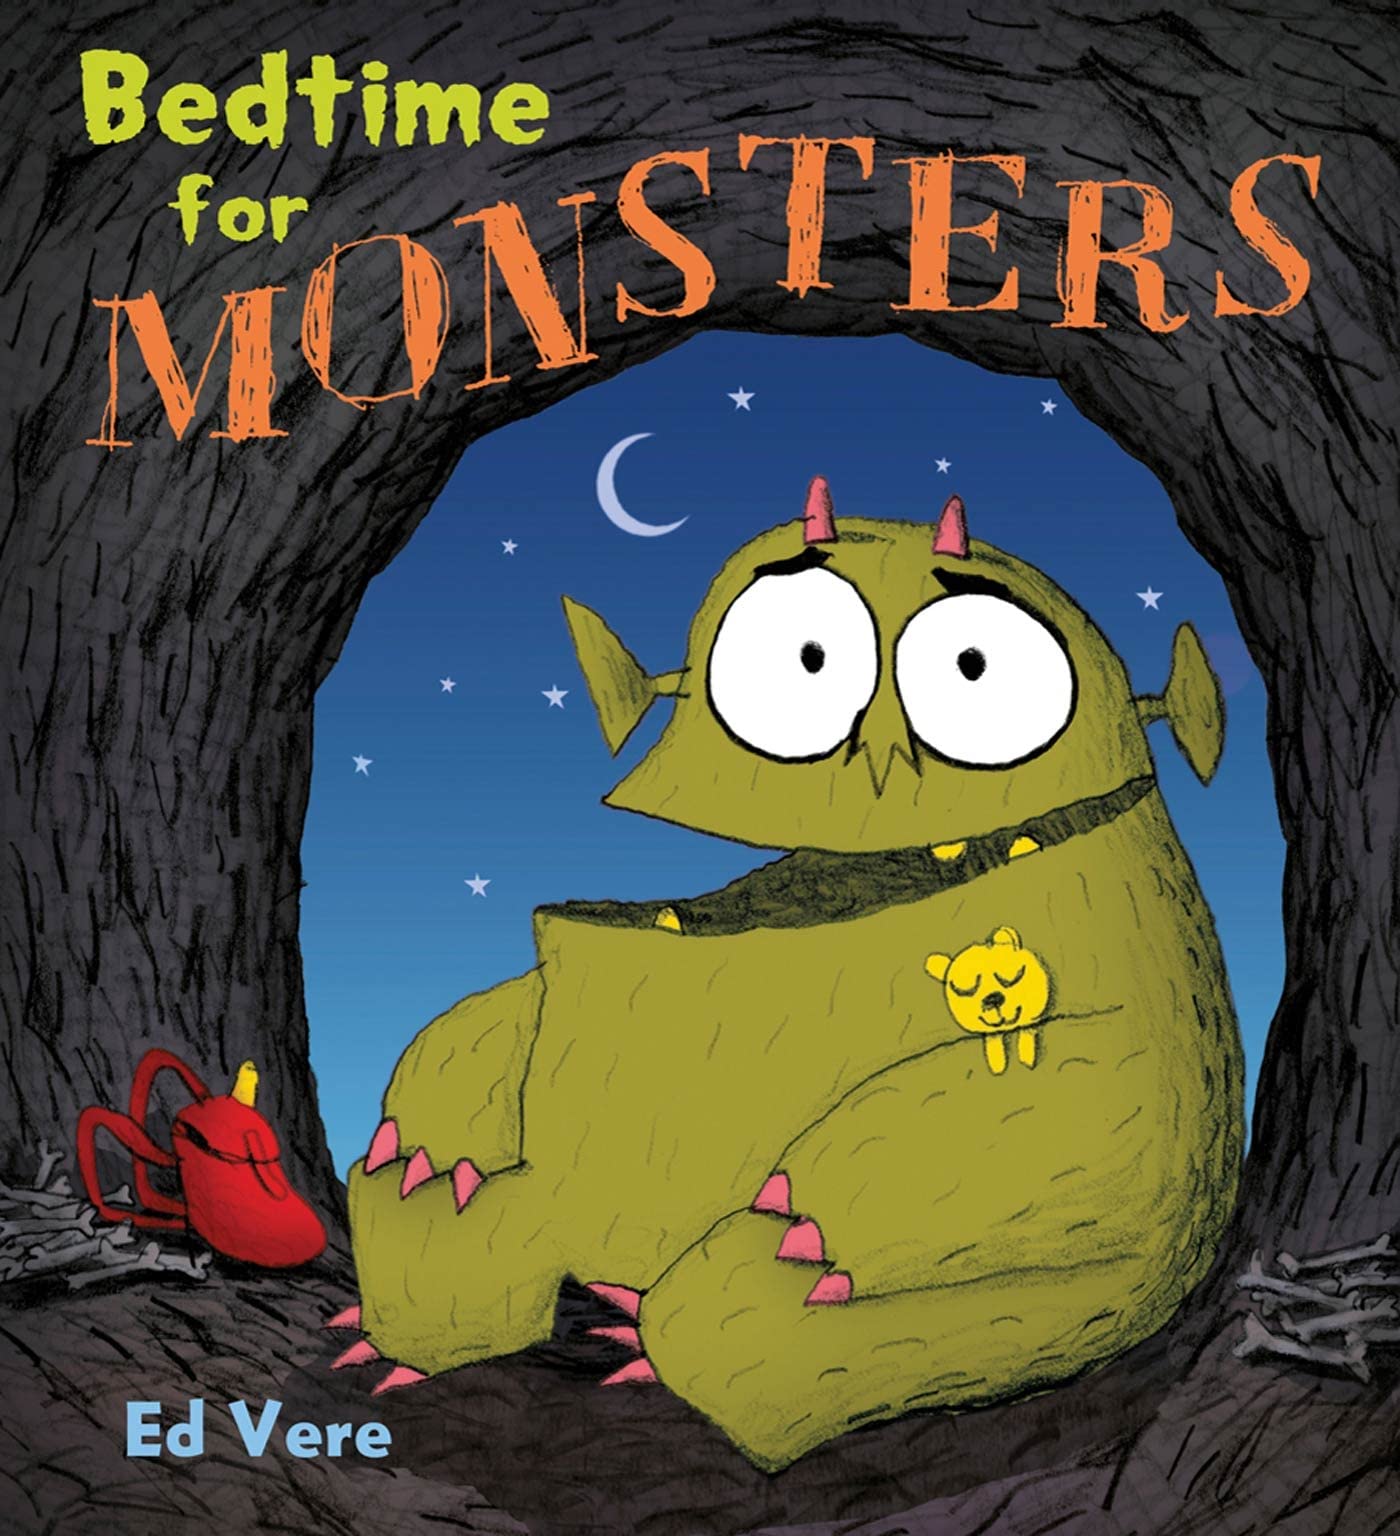 IMG : Bedtime for Monsters